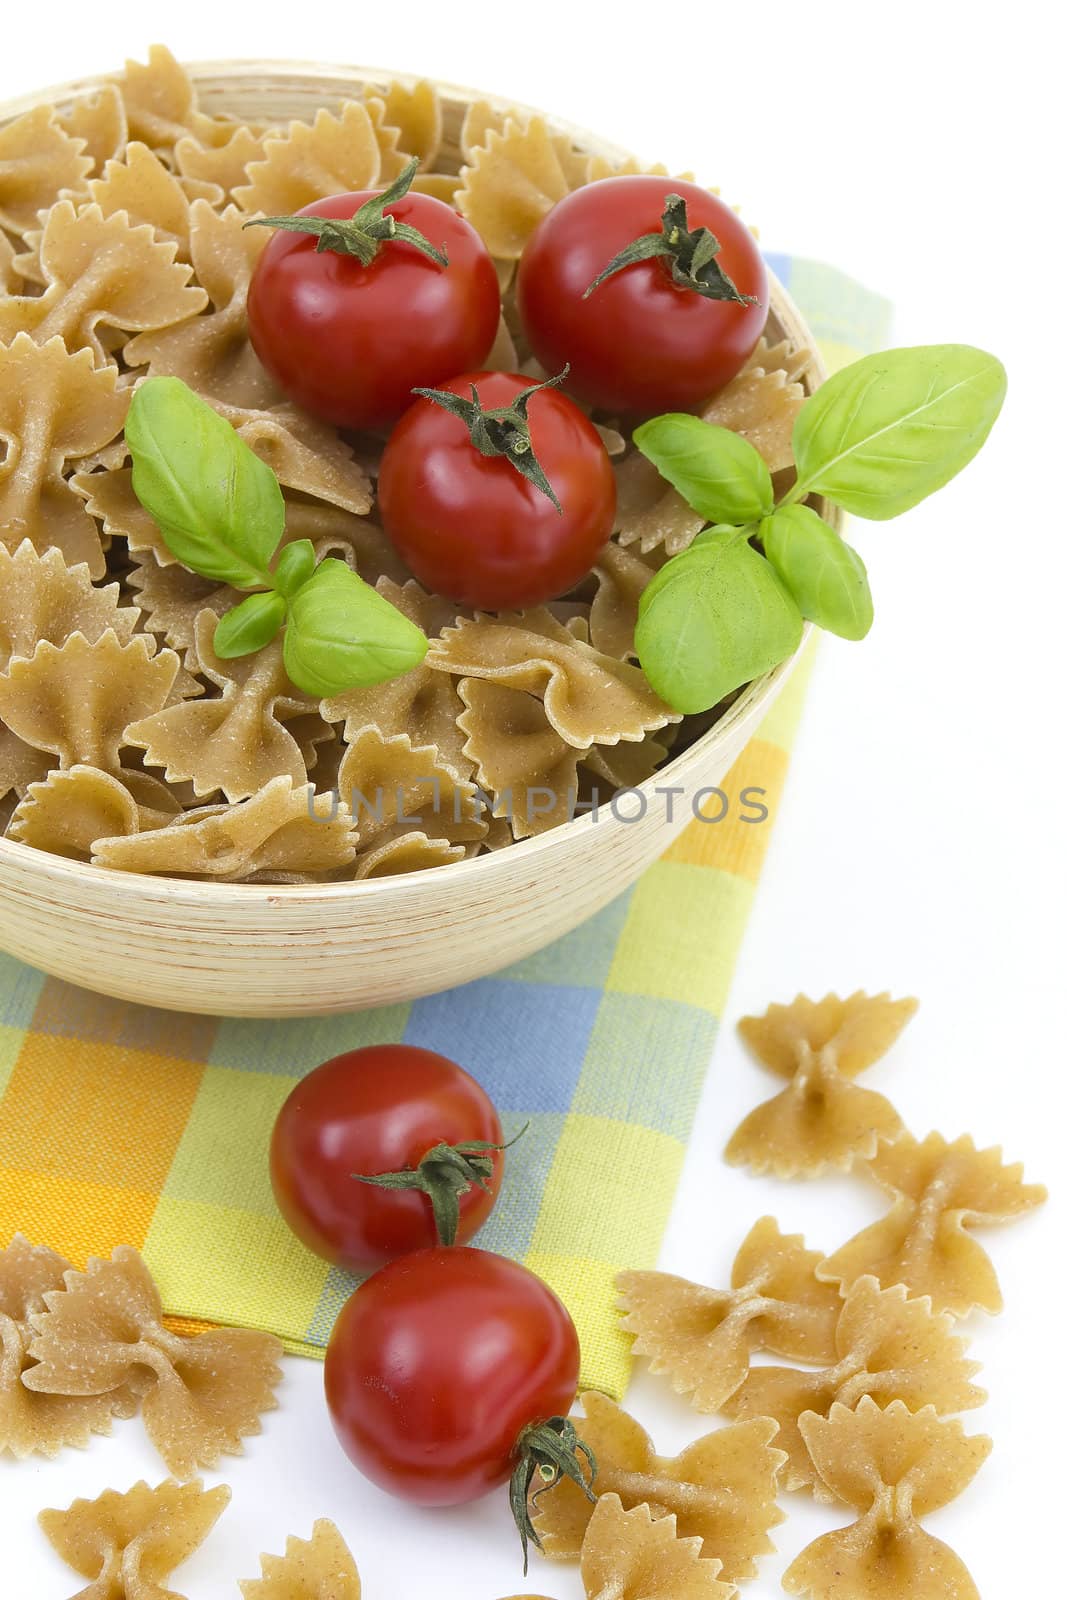 vegetarian food with tomato isolated on white background  by miradrozdowski